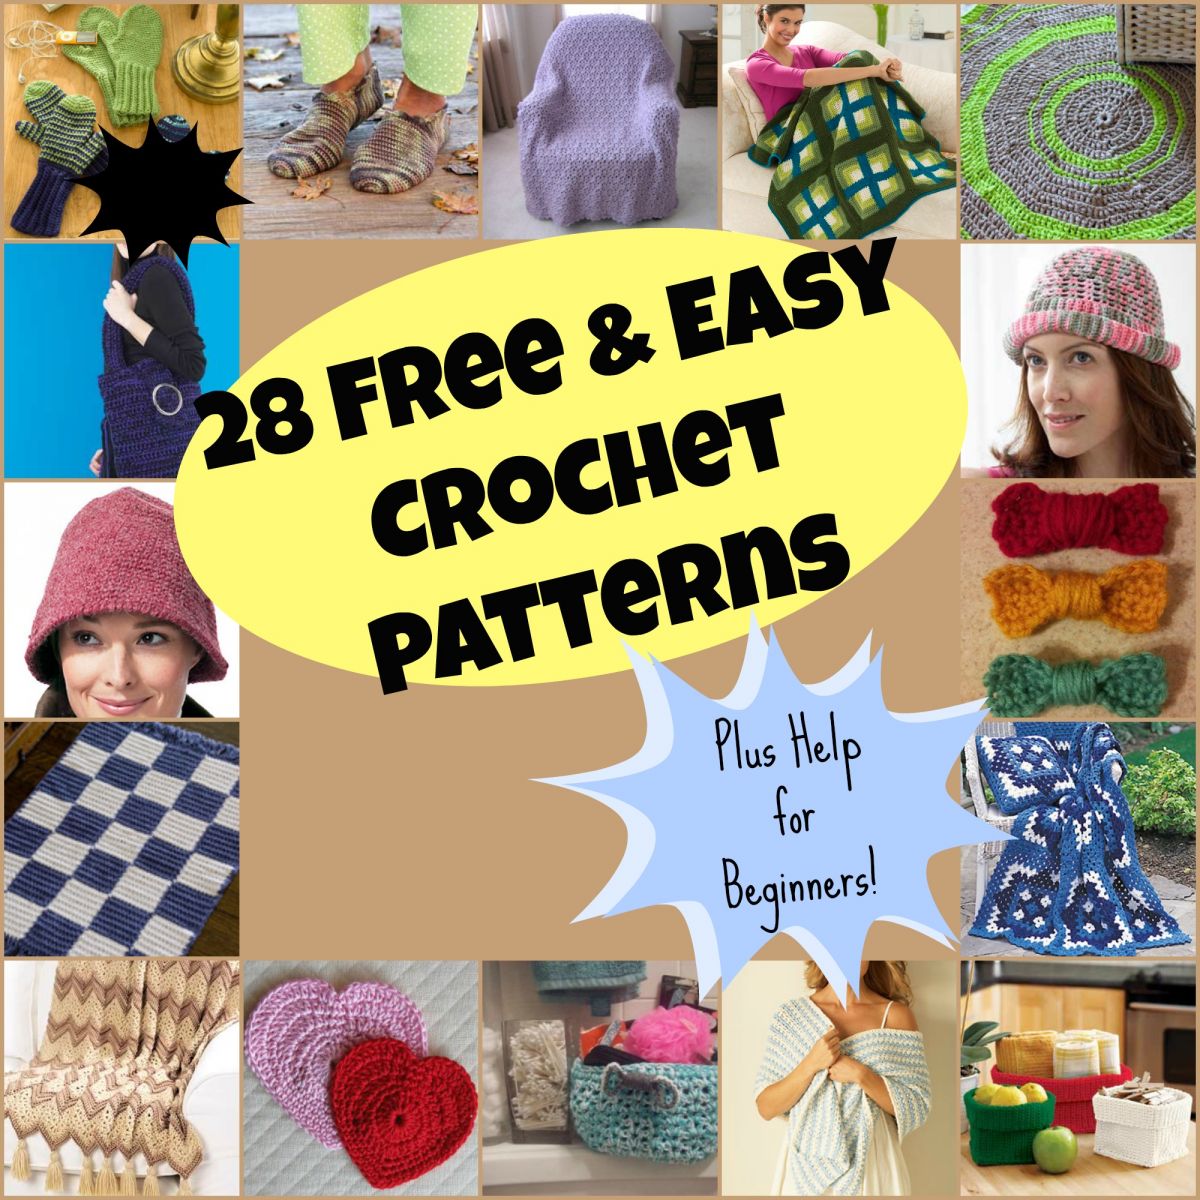 http://www.favequilts.com/master_images/Crochet/easy-crochet-patterns.jpg